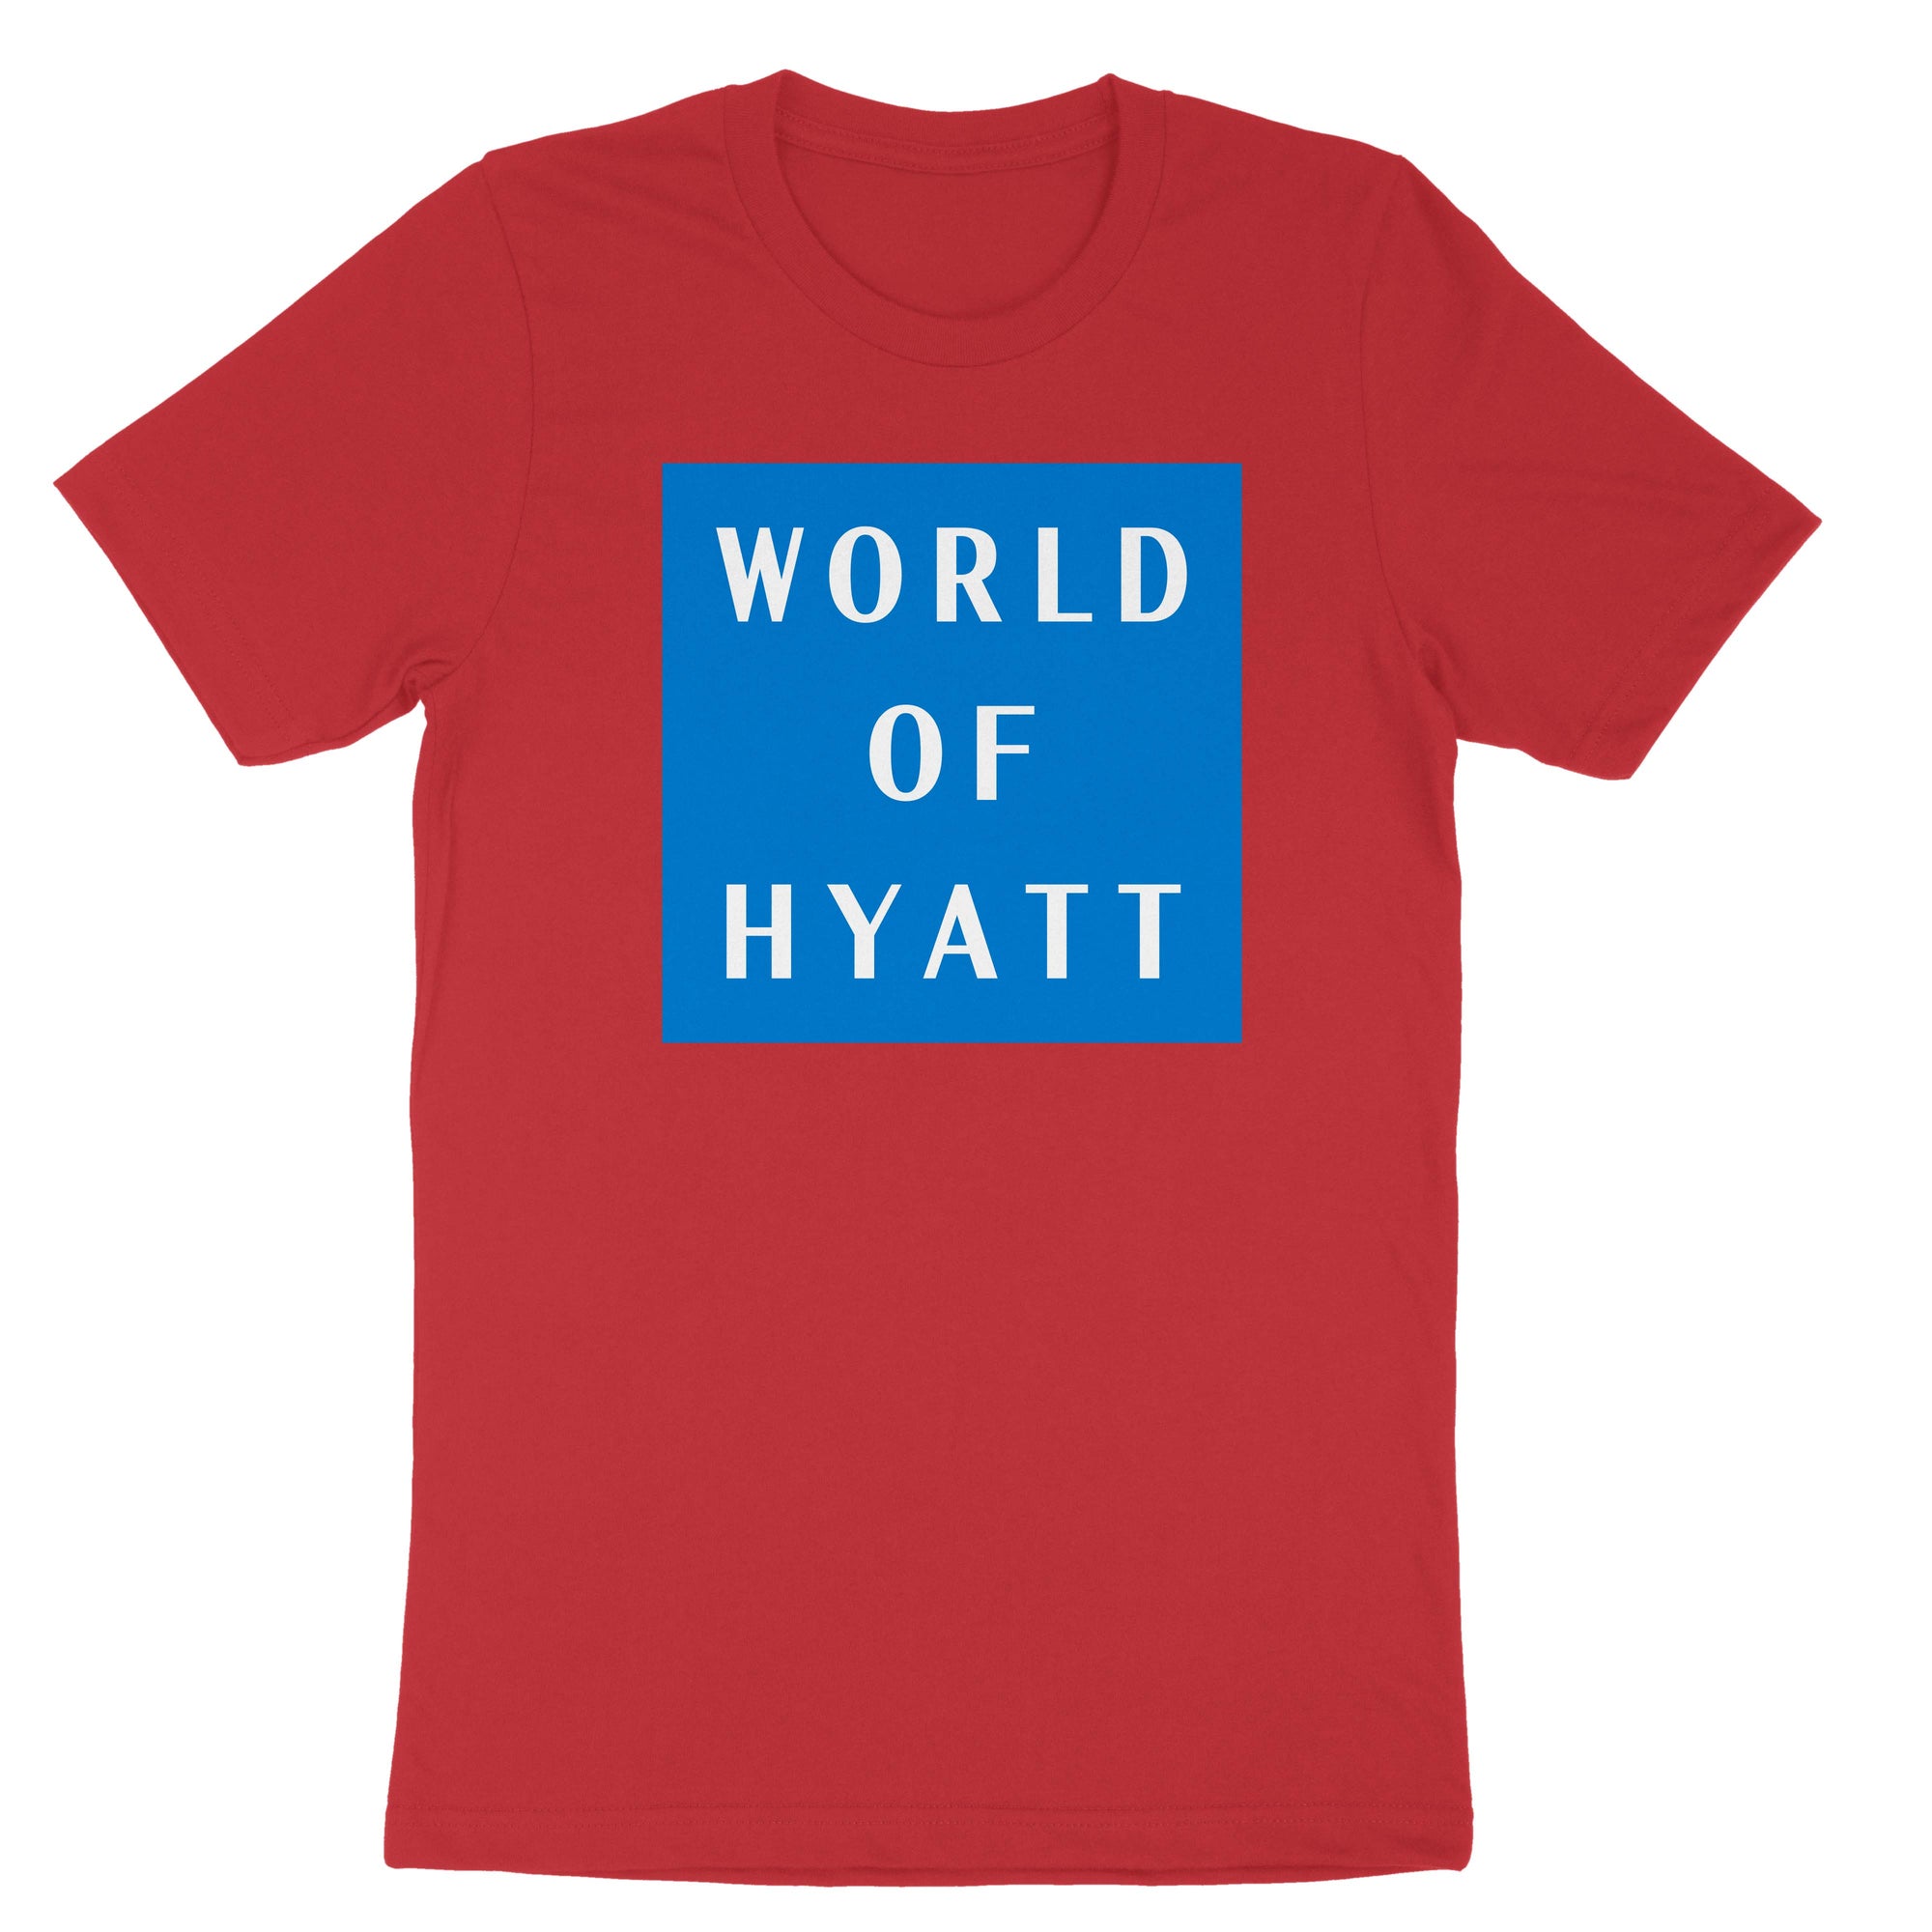 World of Hyatt Volunteer T-Shirt (Grand Hyatt)